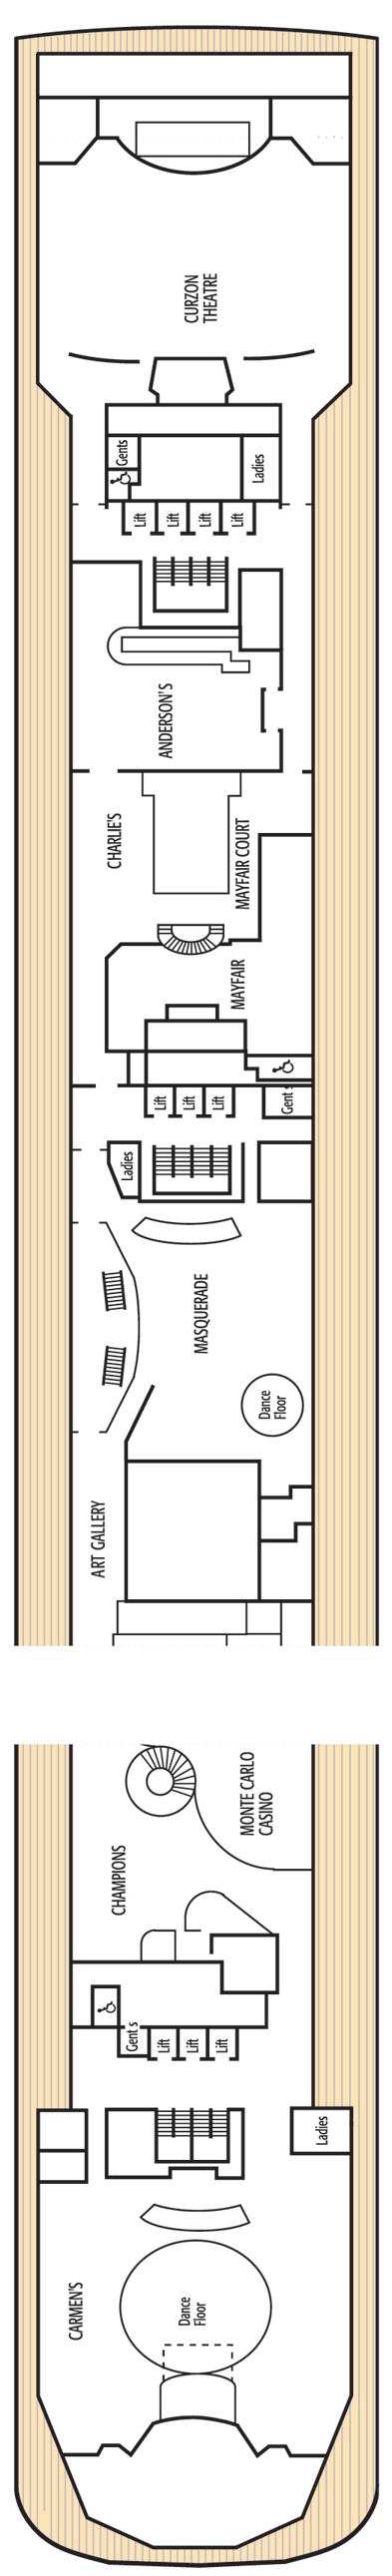 Prom Deck Deck Plan